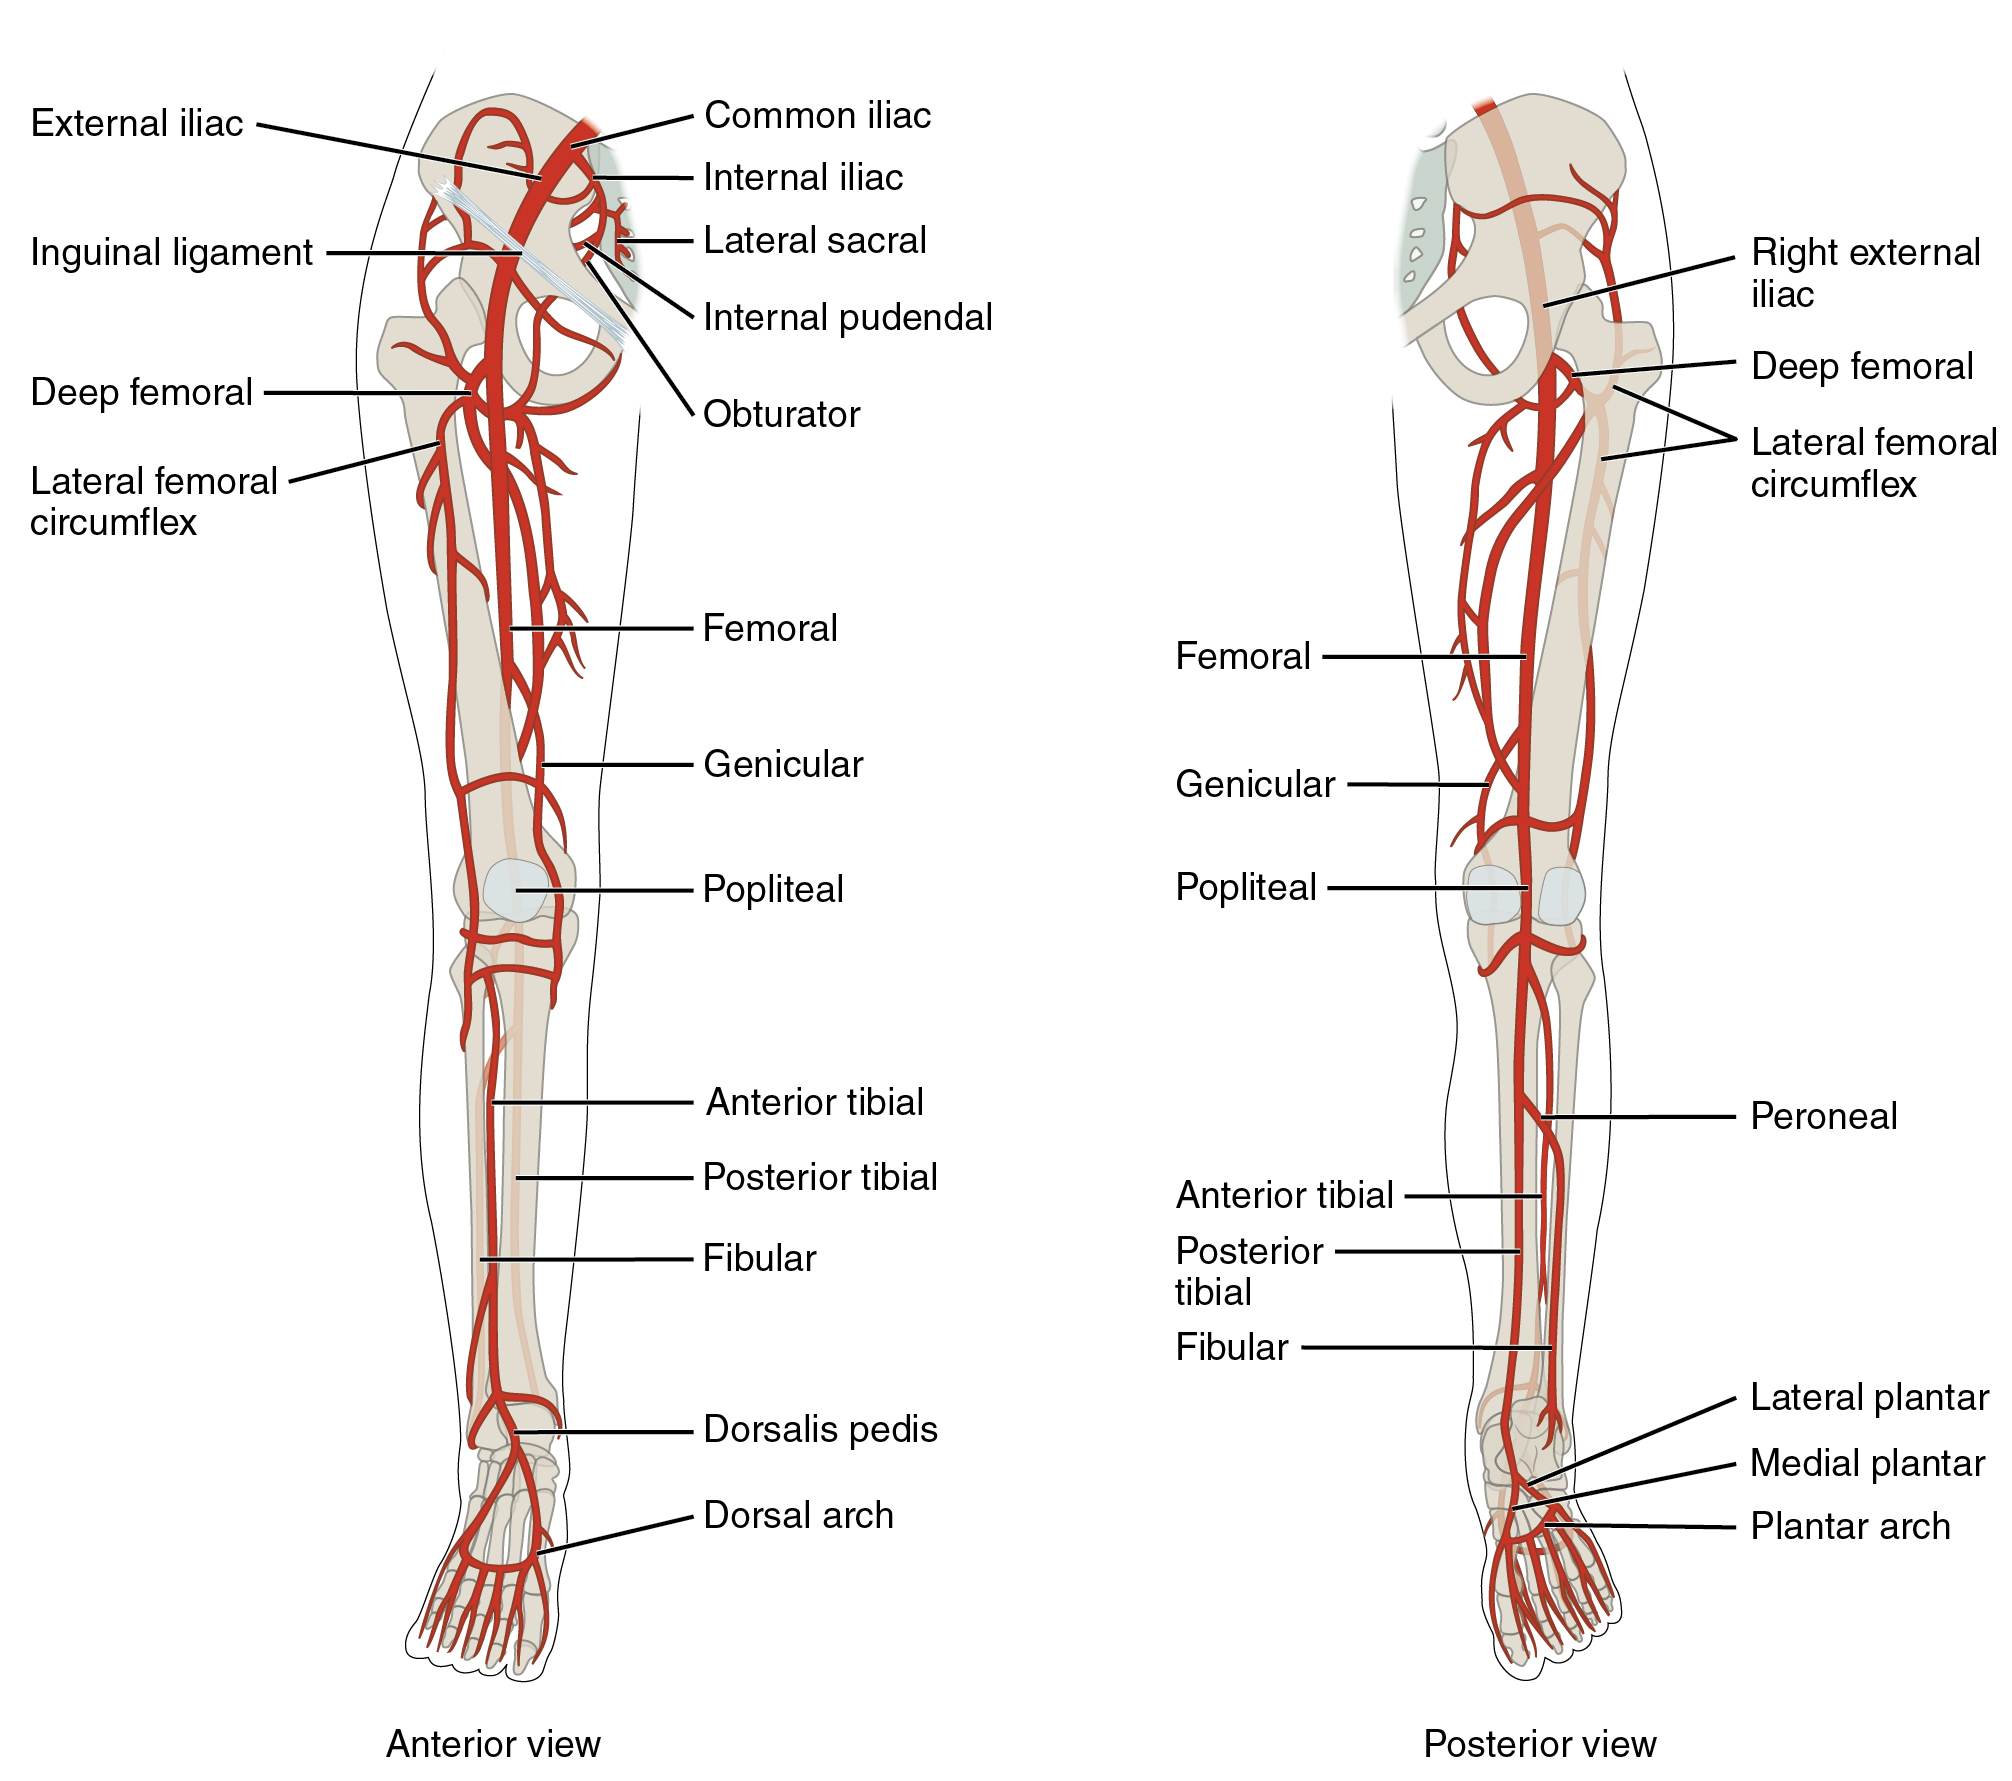 Arteries Supplying the Lower Limb